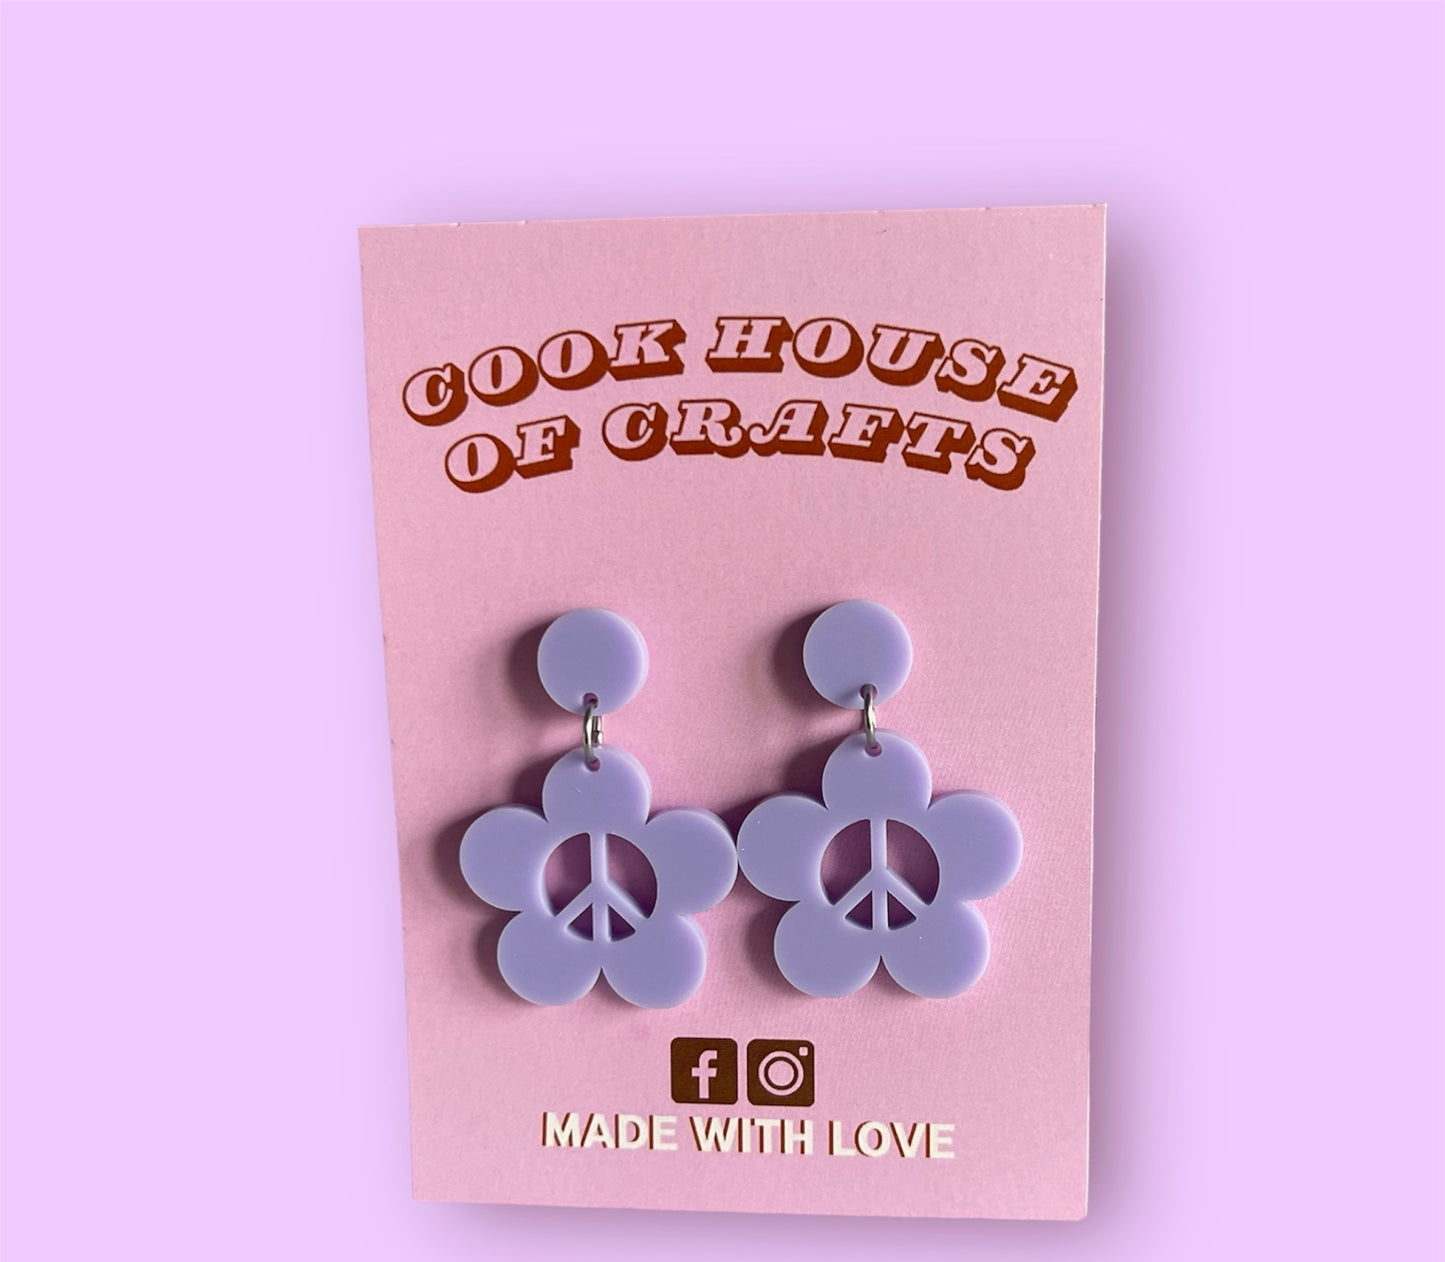 Flower power pendants 🌸